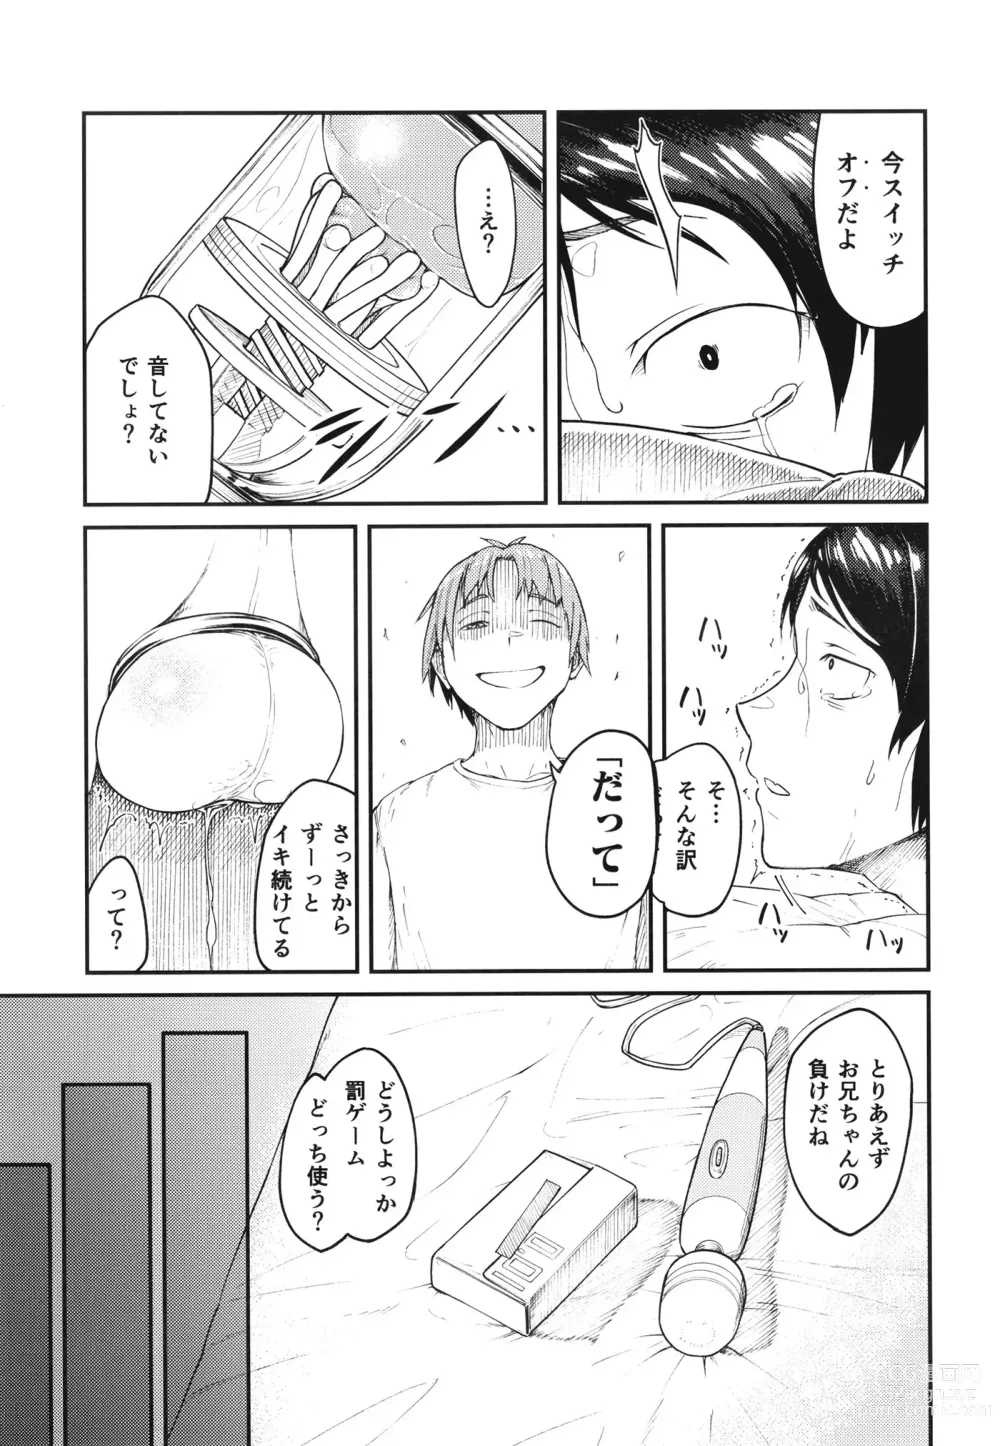 Page 13 of doujinshi MHD-01